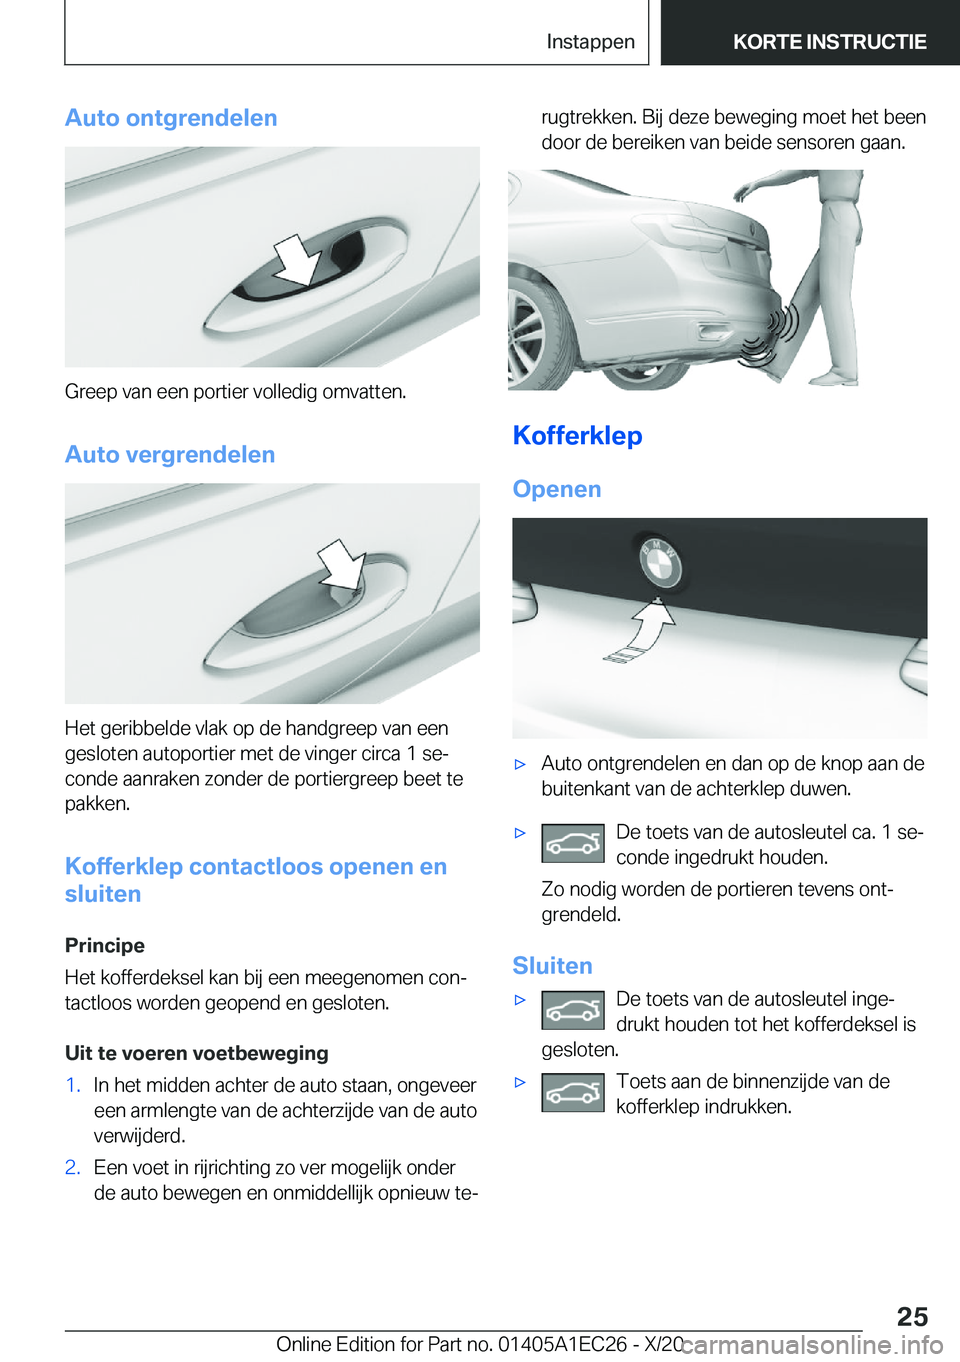 BMW 8 SERIES GRAN COUPE 2021  Instructieboekjes (in Dutch) �A�u�t�o��o�n�t�g�r�e�n�d�e�l�e�n
�G�r�e�e�p��v�a�n��e�e�n��p�o�r�t�i�e�r��v�o�l�l�e�d�i�g��o�m�v�a�t�t�e�n�.�A�u�t�o��v�e�r�g�r�e�n�d�e�l�e�n
�H�e�t��g�e�r�i�b�b�e�l�d�e��v�l�a�k��o�p��d�e